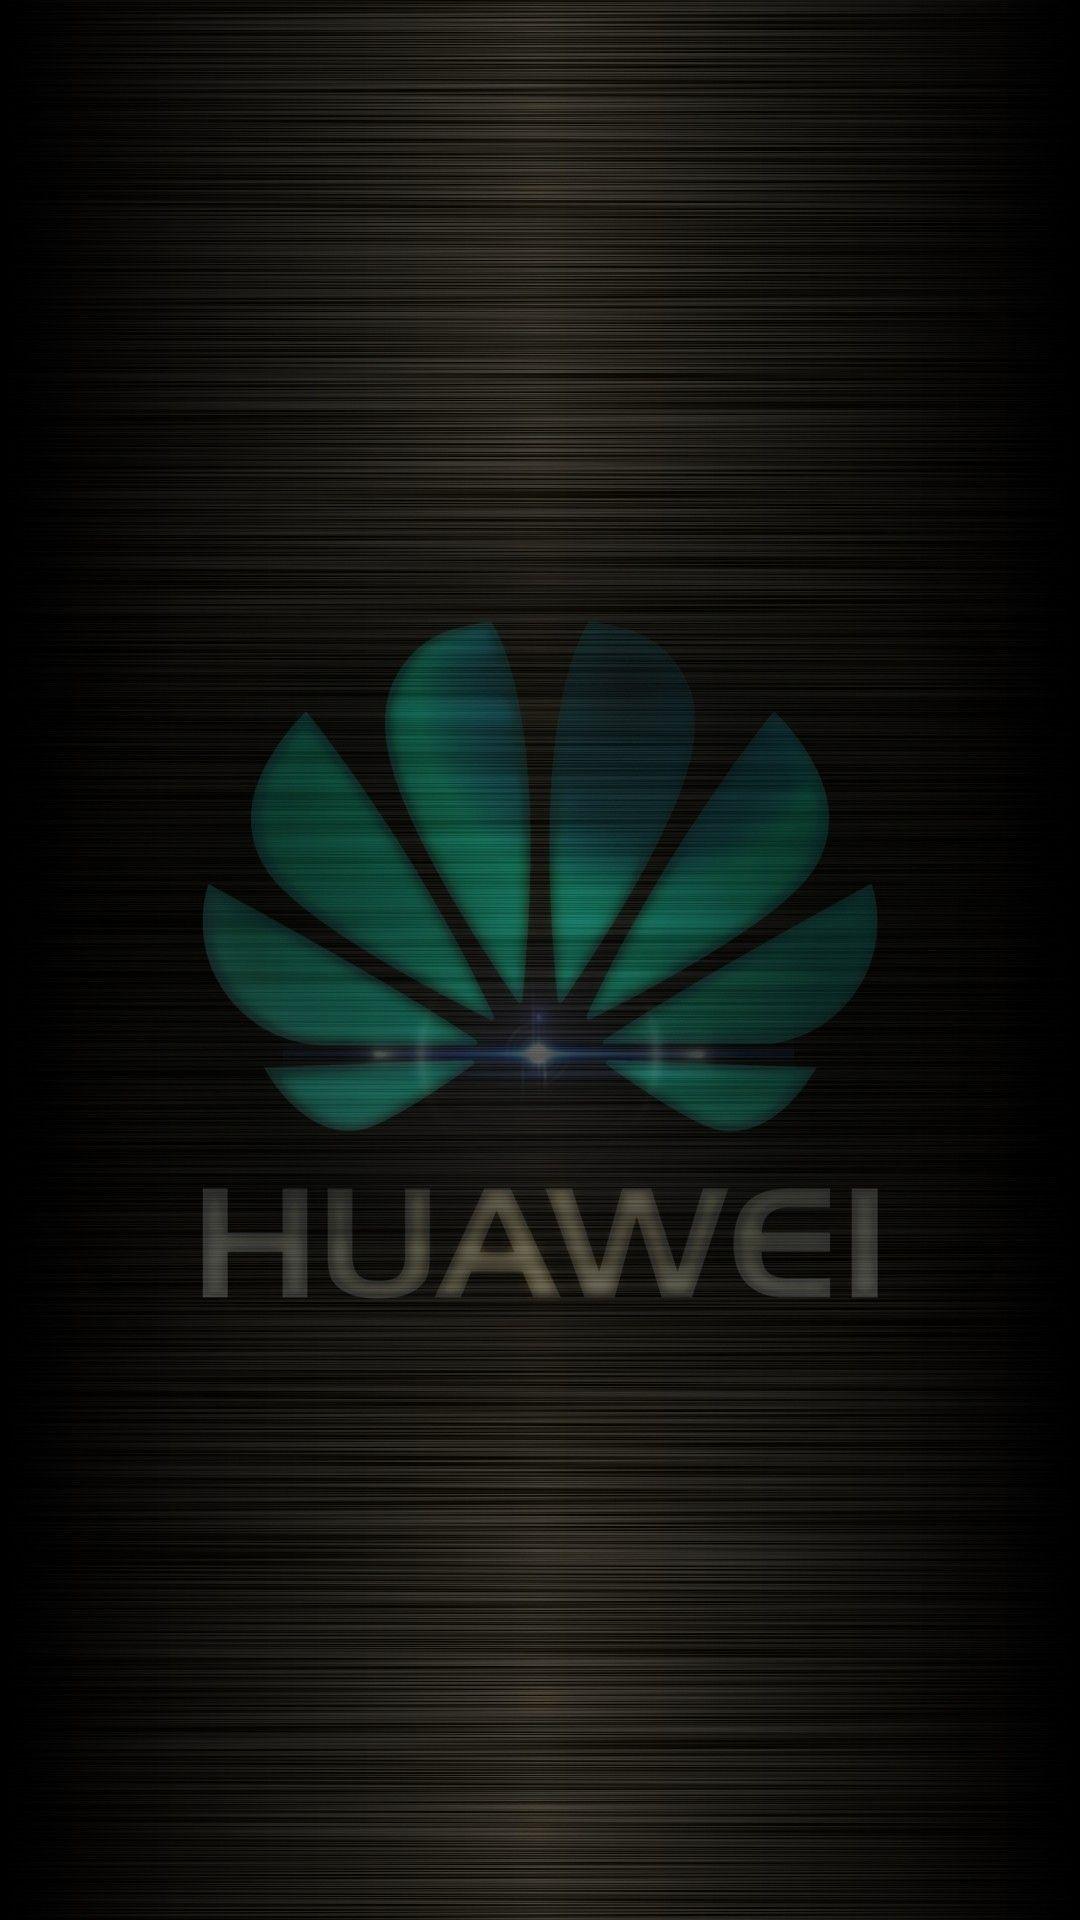 Huawei Mobile Wallpaper Free Huawei Mobile